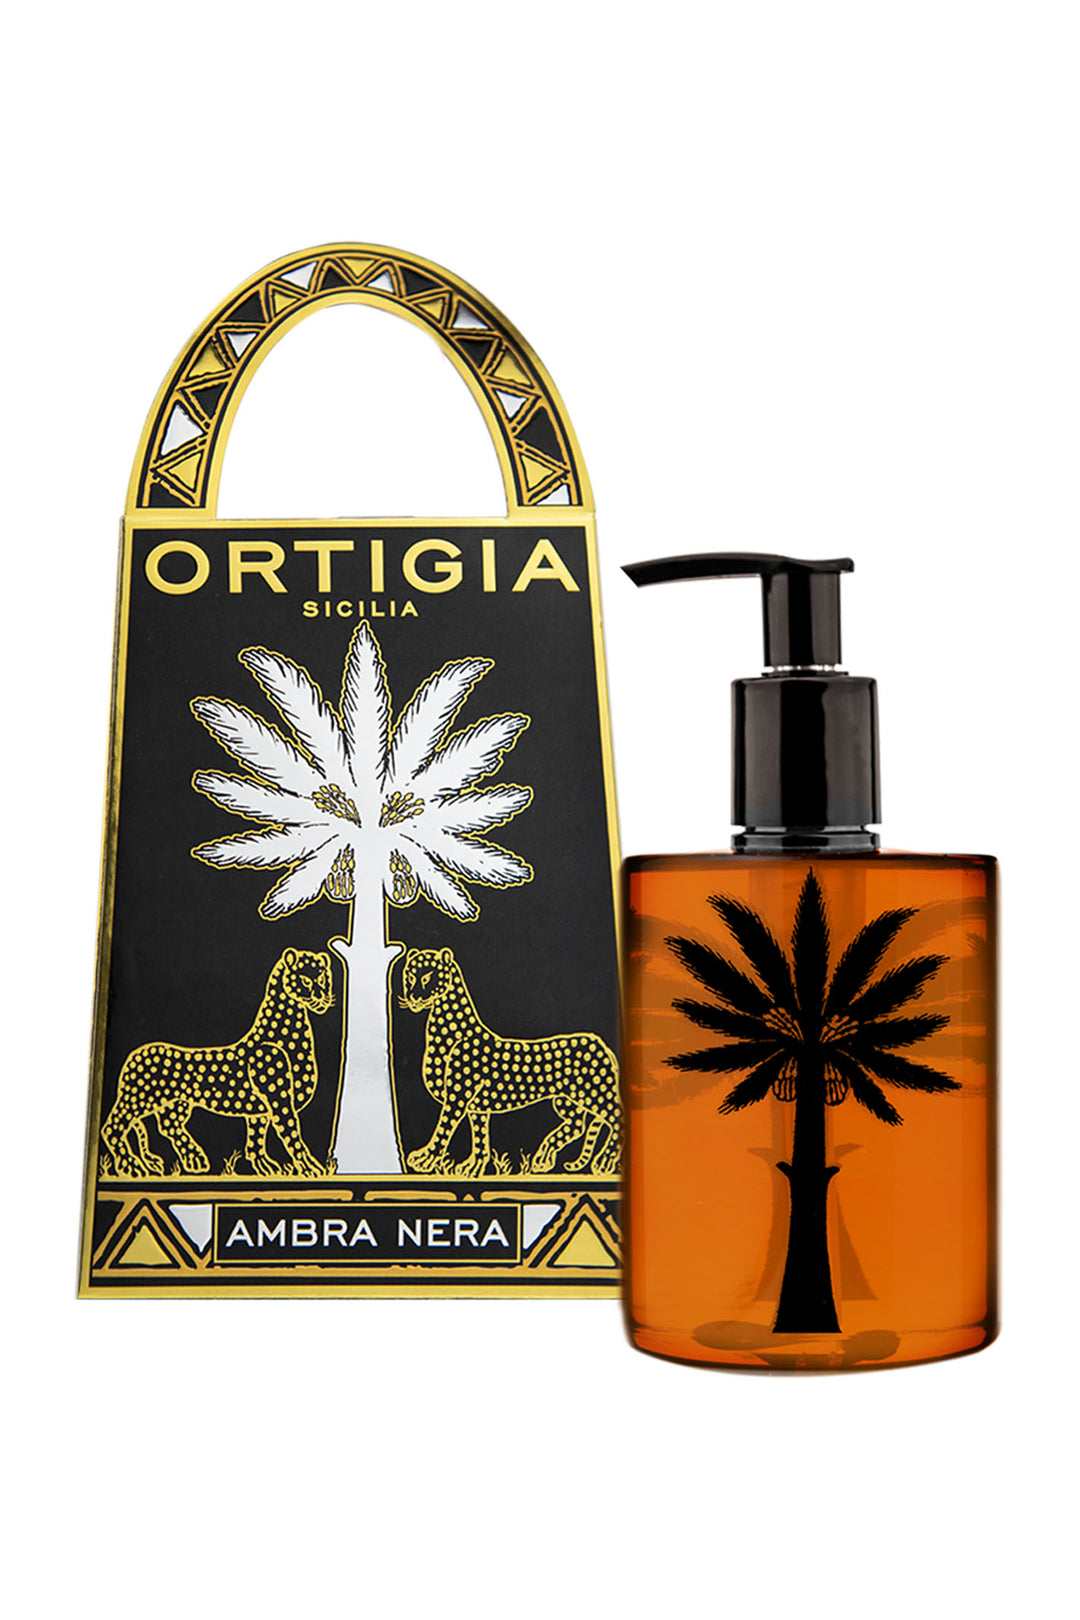 Ortigia Sicilia Ambra Nera Liquid Soap 300ml - Olivia Grace Fashion